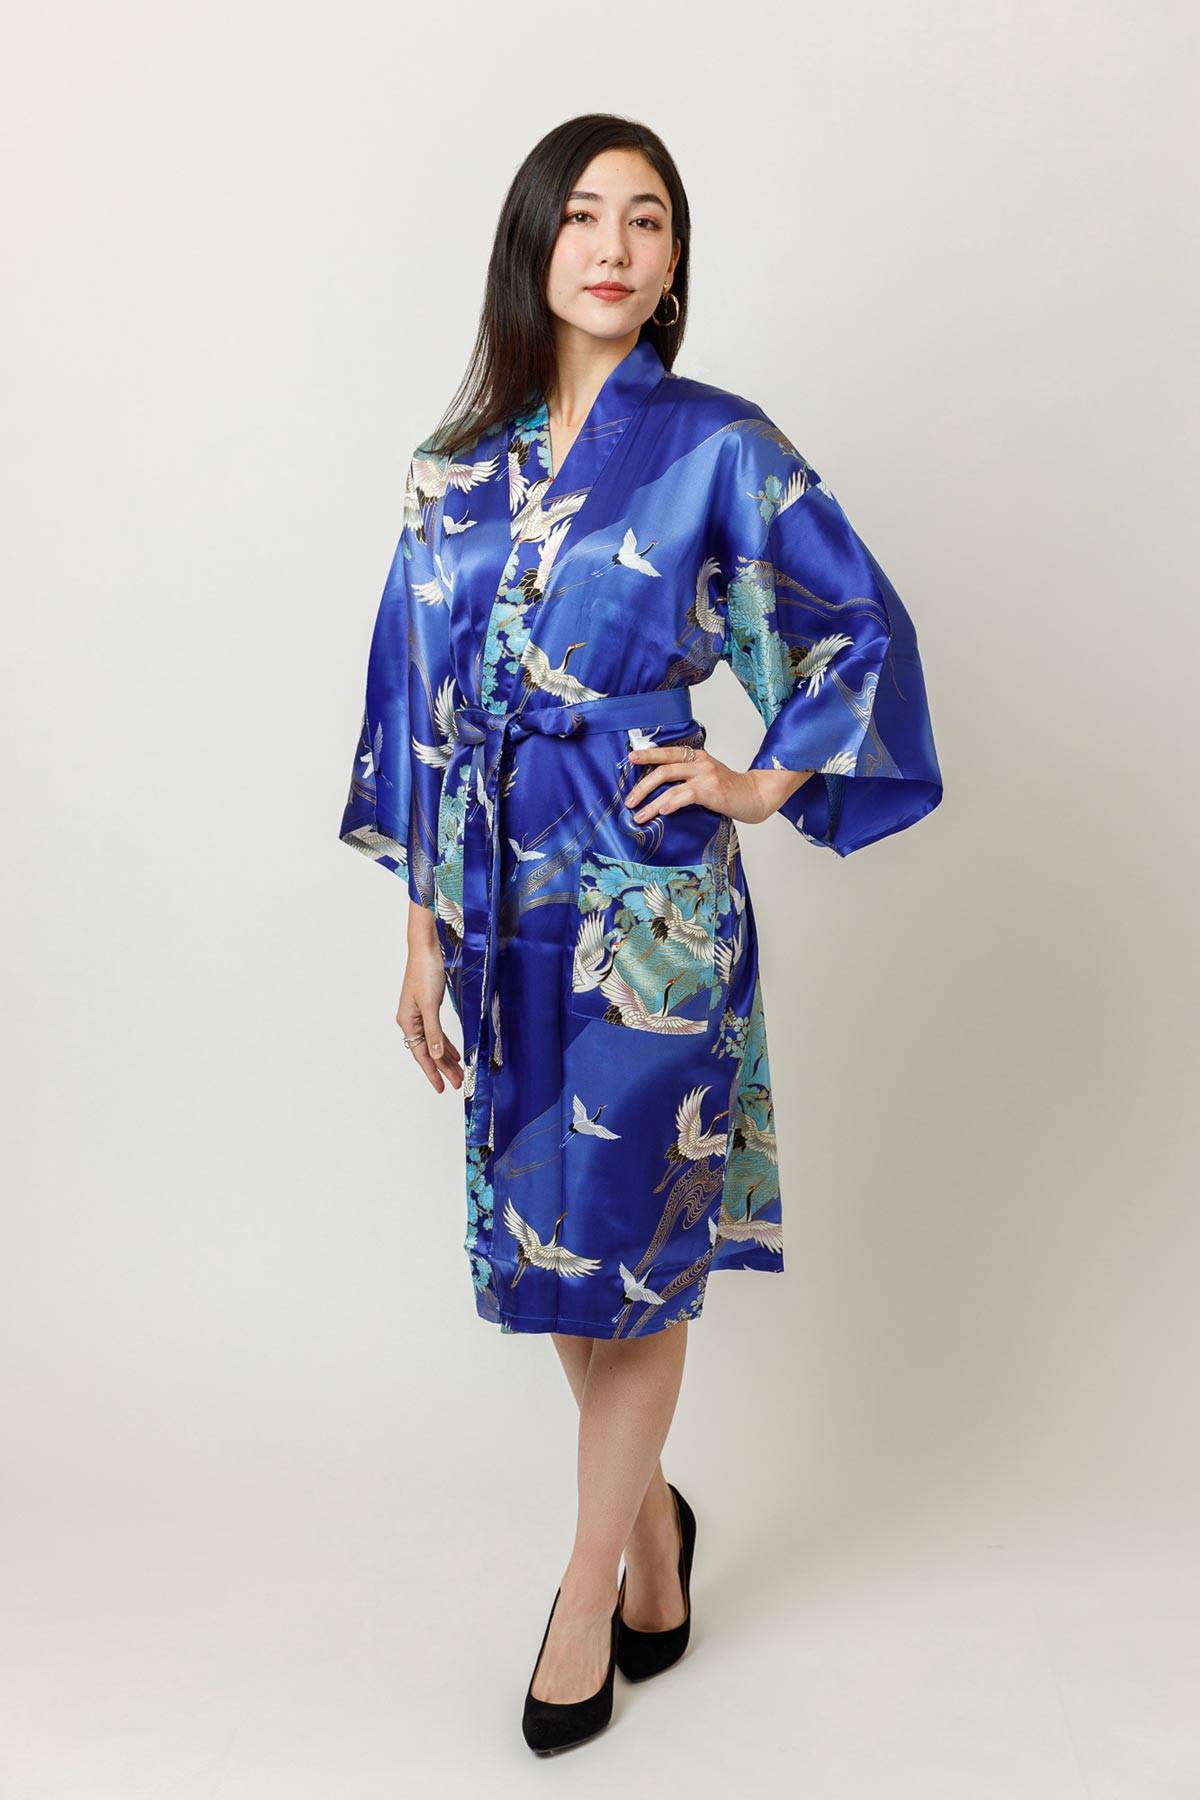 Bathrobe Cotton fabric and free size comfortable bathrobe and tunic dress While on blue  Hand block print Kimono Dress